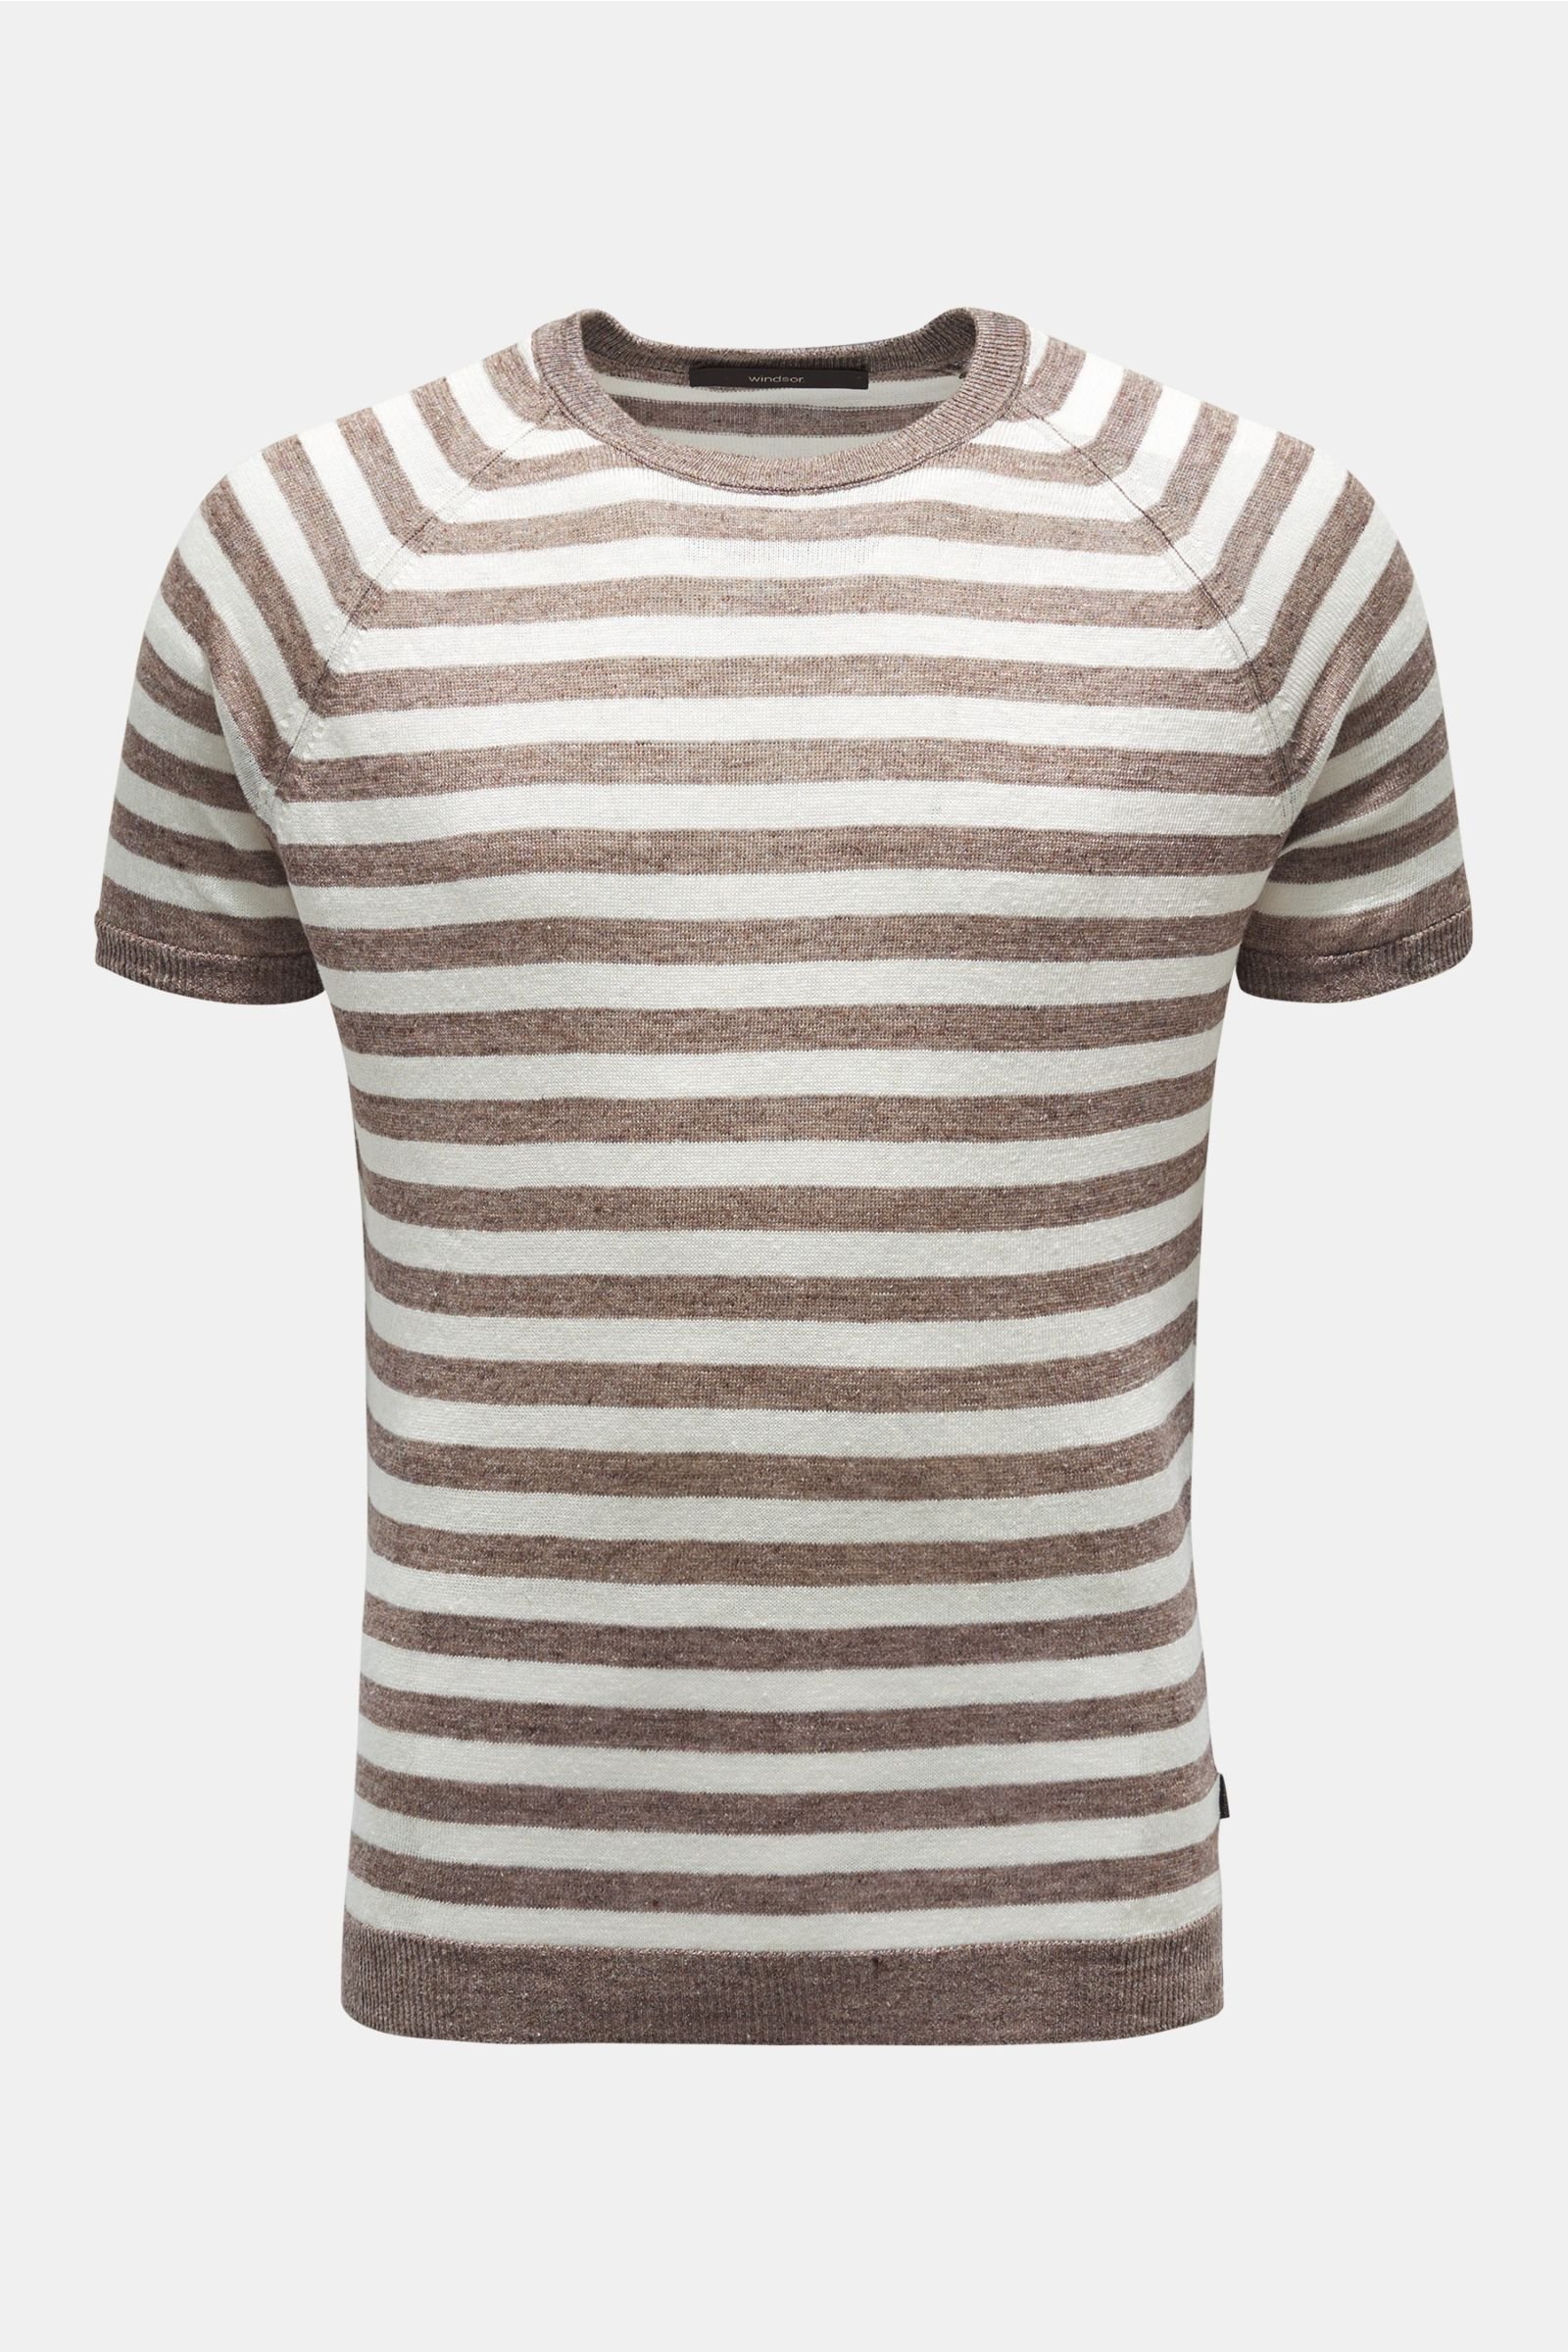 Linen short sleeve jumper brown/off-white striped